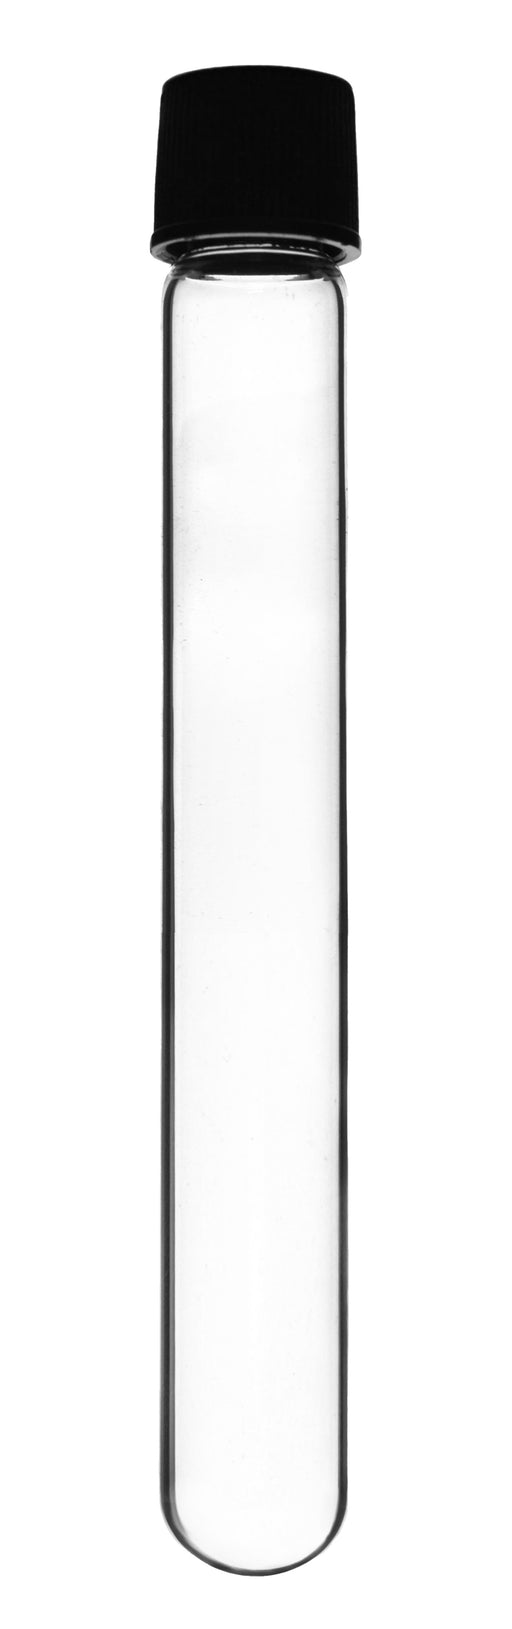 Culture Tube with Screw Cap, 25mL - 18x150mm - Round Bottom - Borosilicate Glass